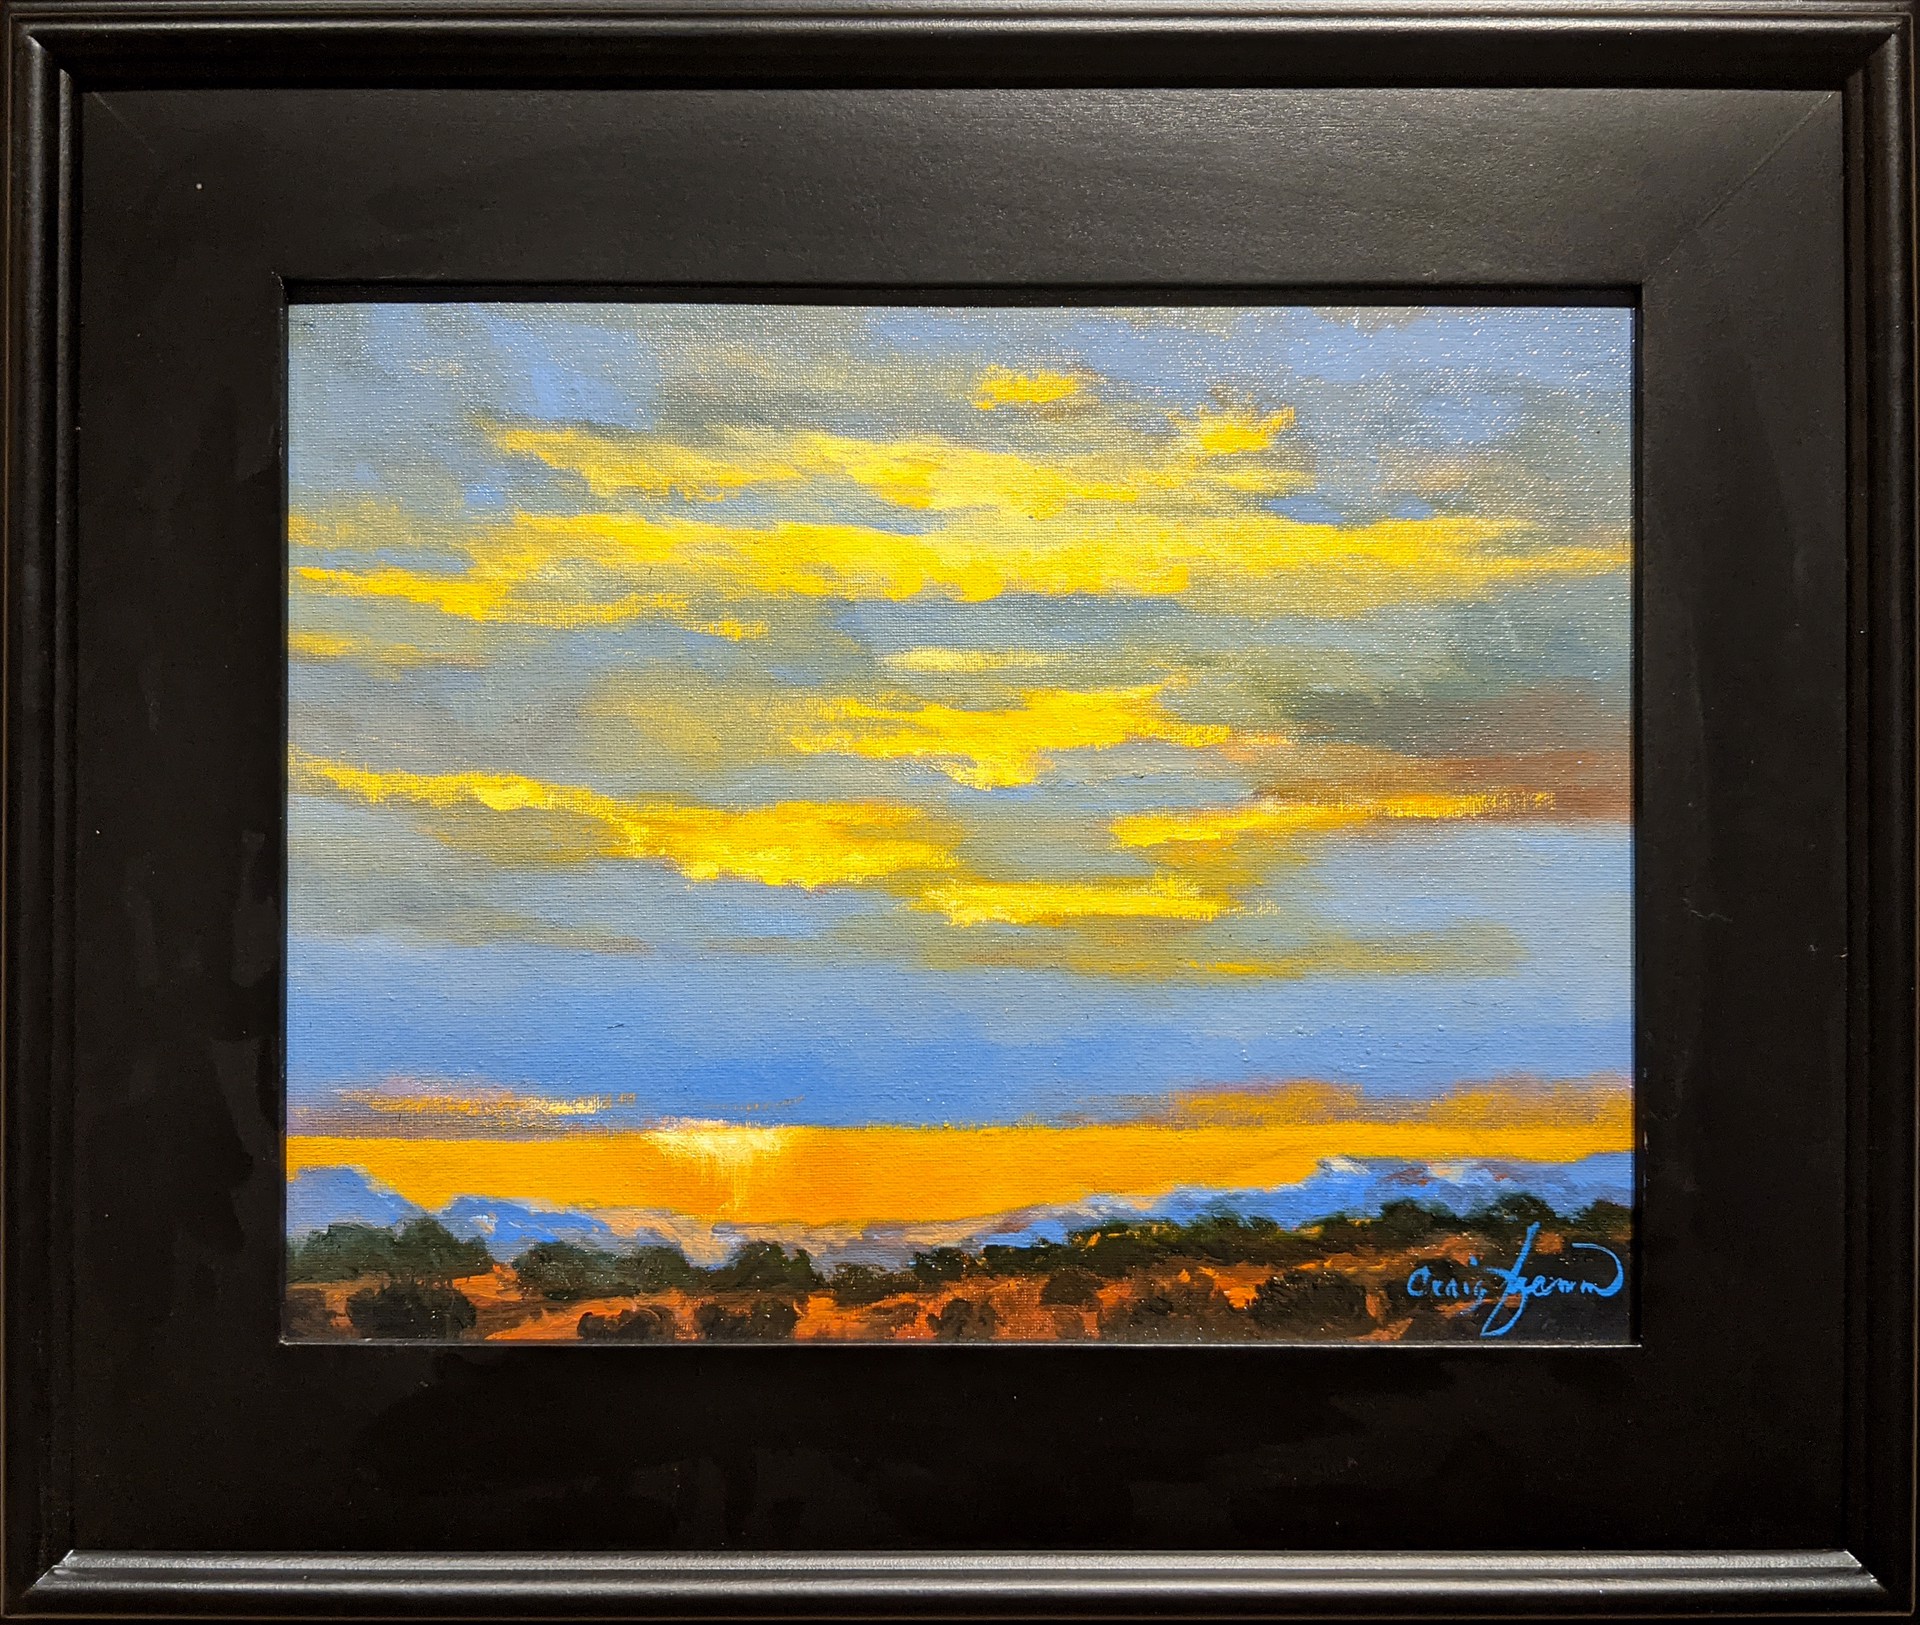 Pinon Sunset by Craig Freeman